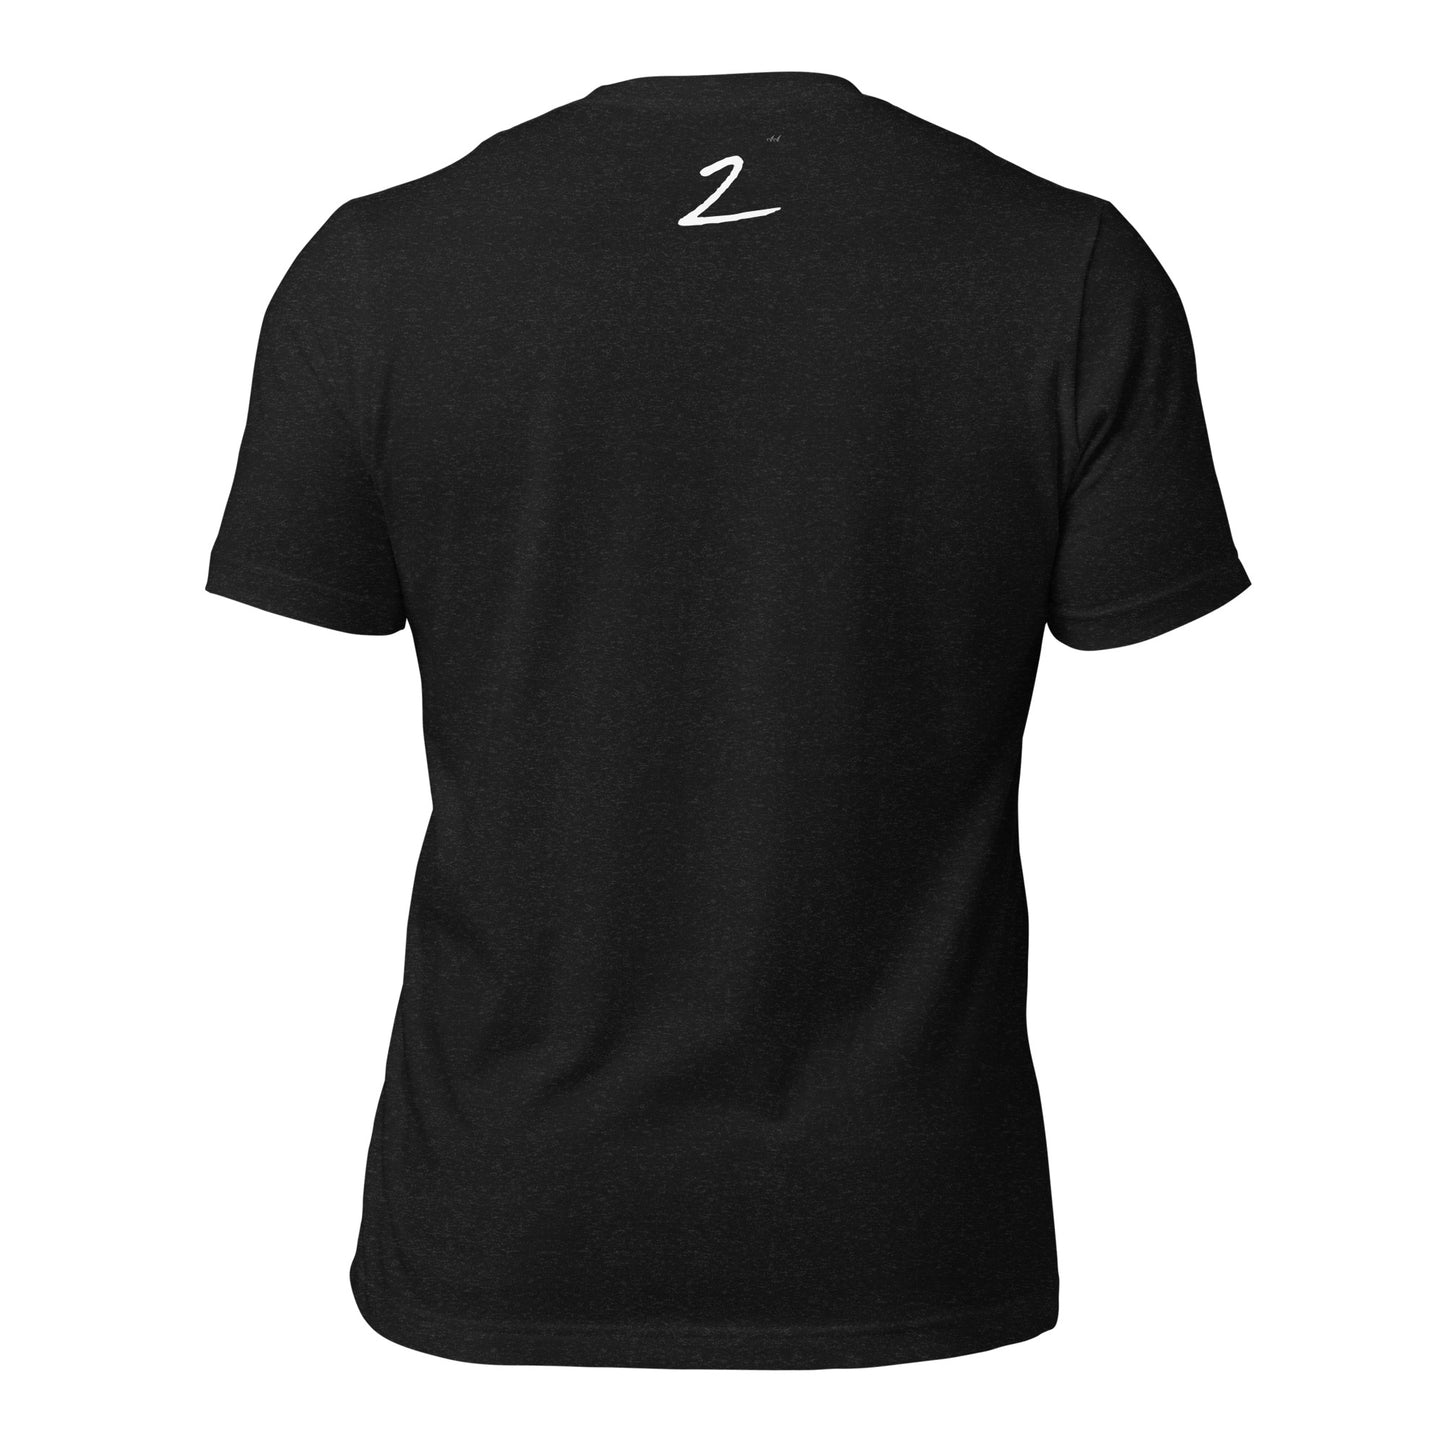 2 Numeral Unisex t-shirt